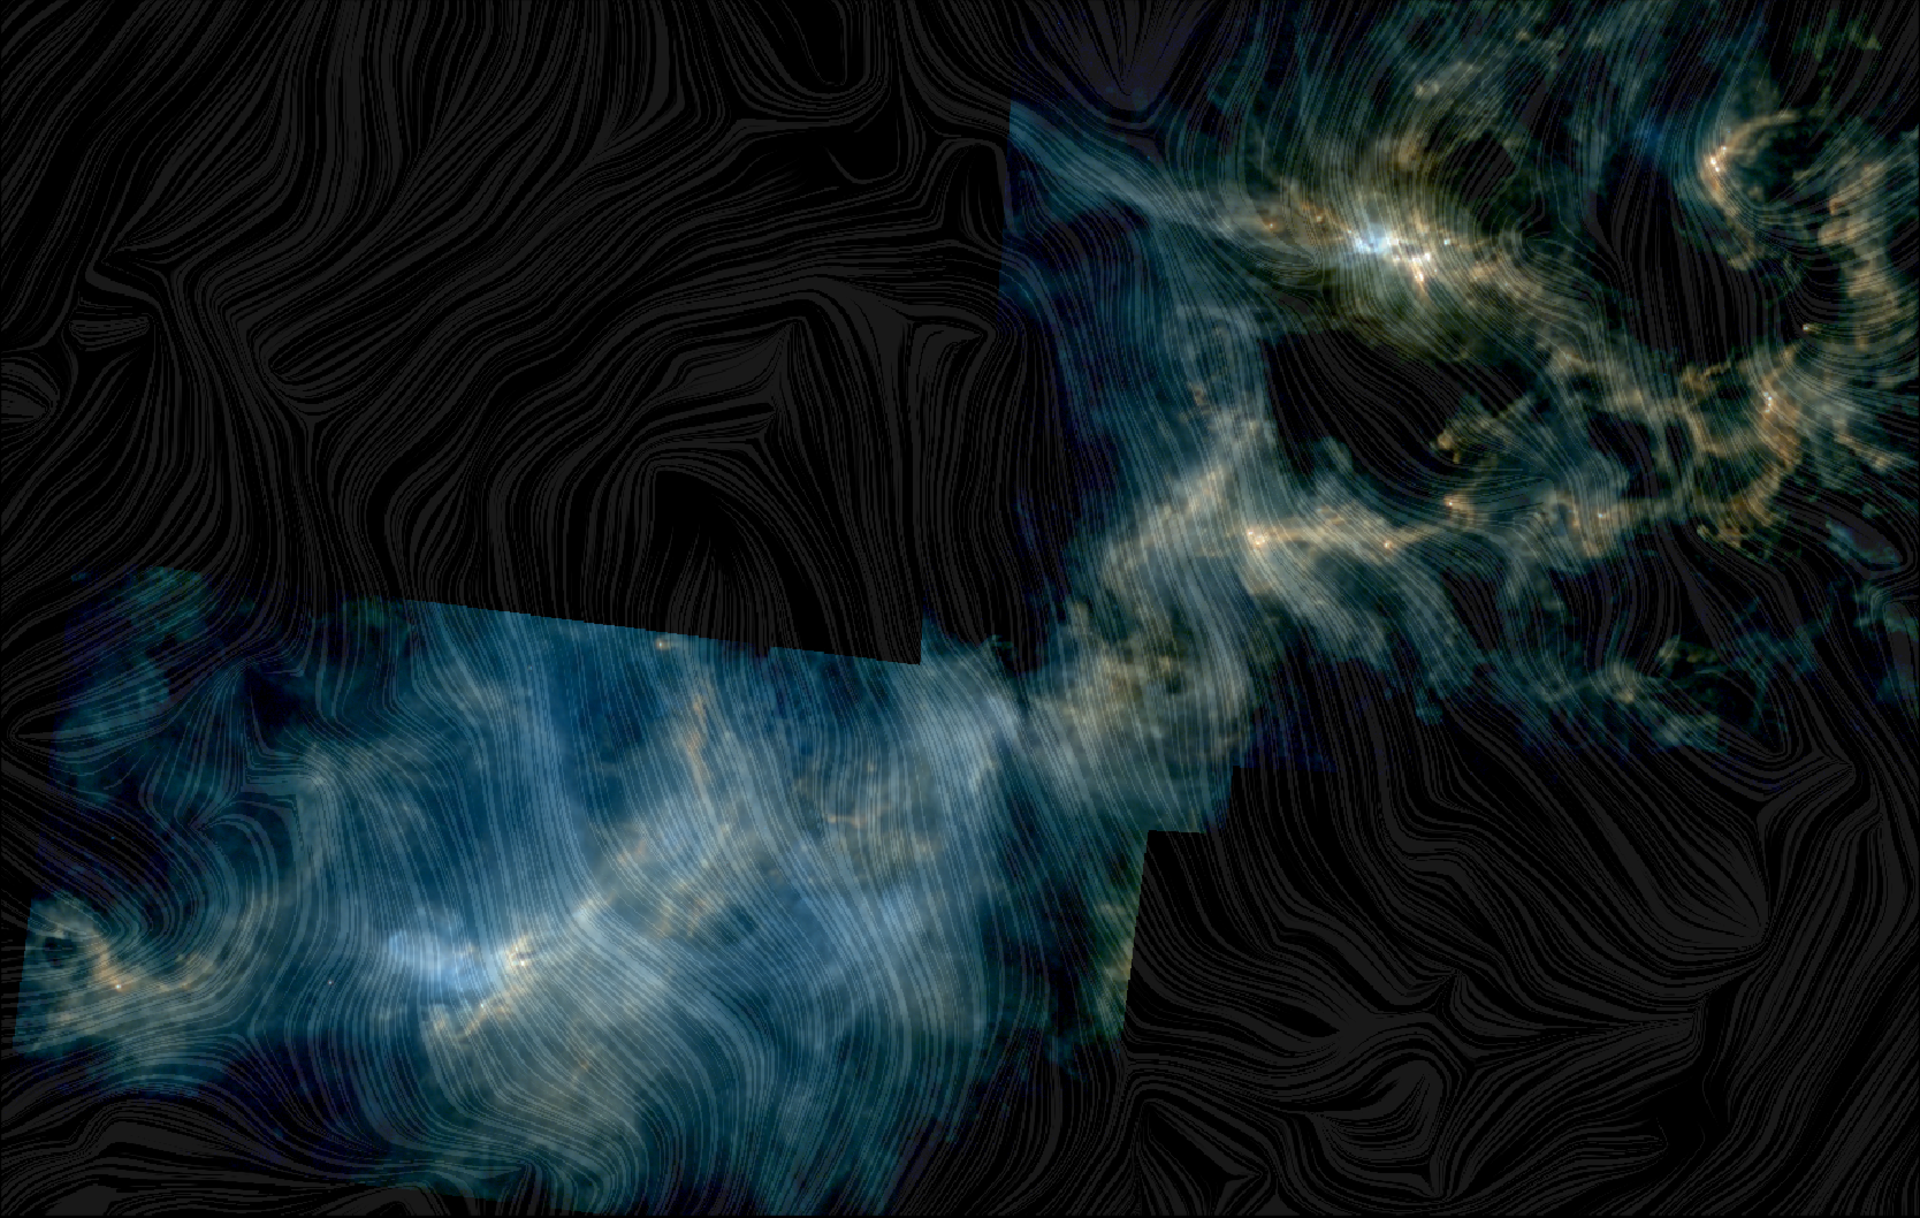 The Perseus molecular cloud viewed by Herschel and Planck